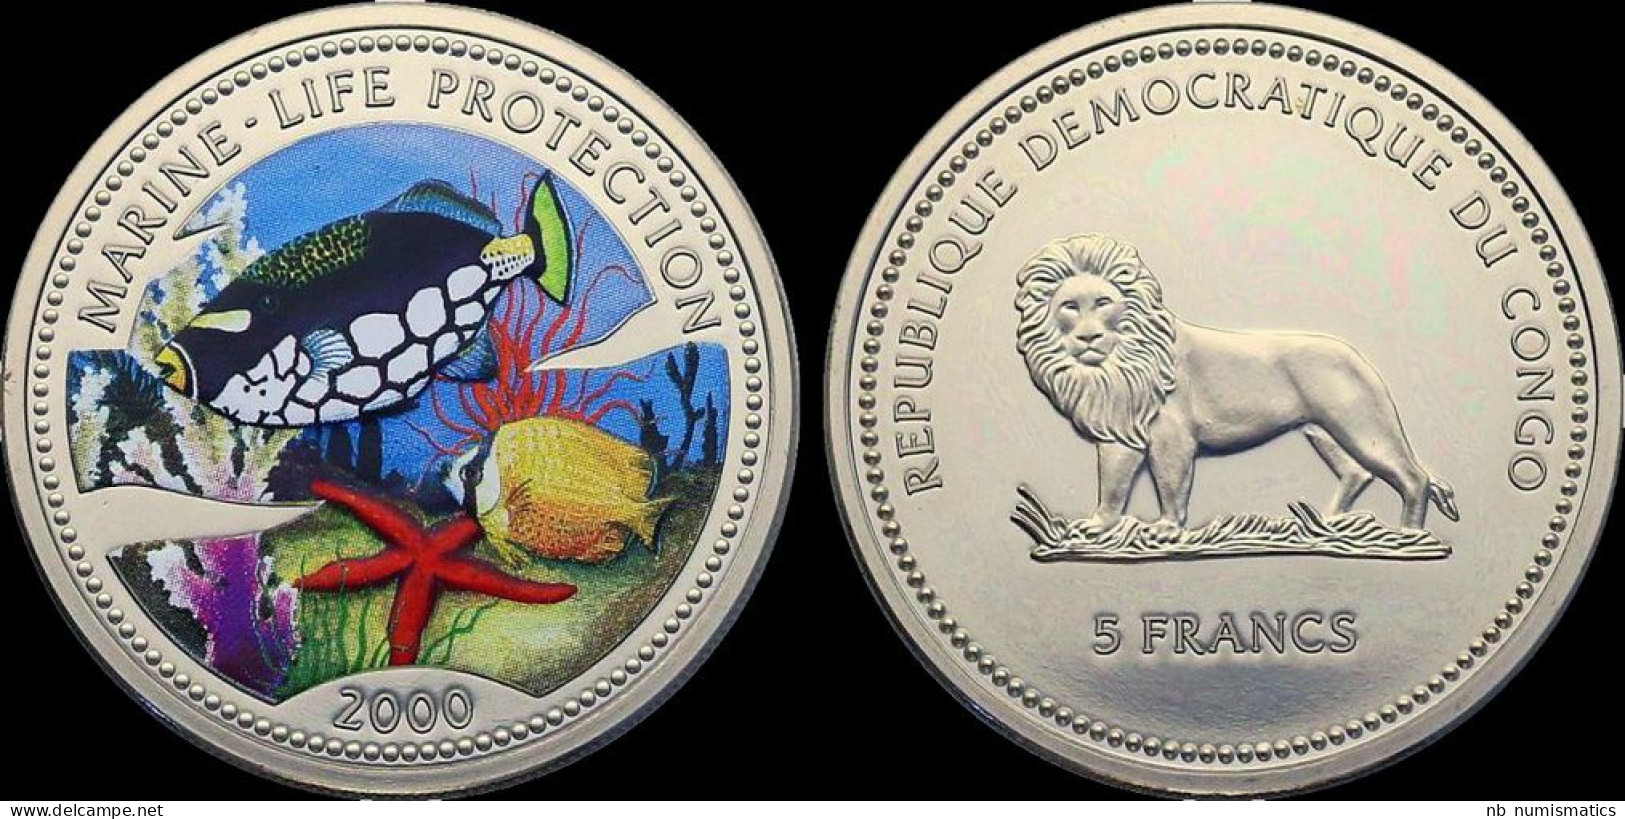 Republique Democratique Du Congo 5 Francs 2000 Marine-life Protection Proof In Plastic Capsule - Kongo (Dem. Republik 1998)